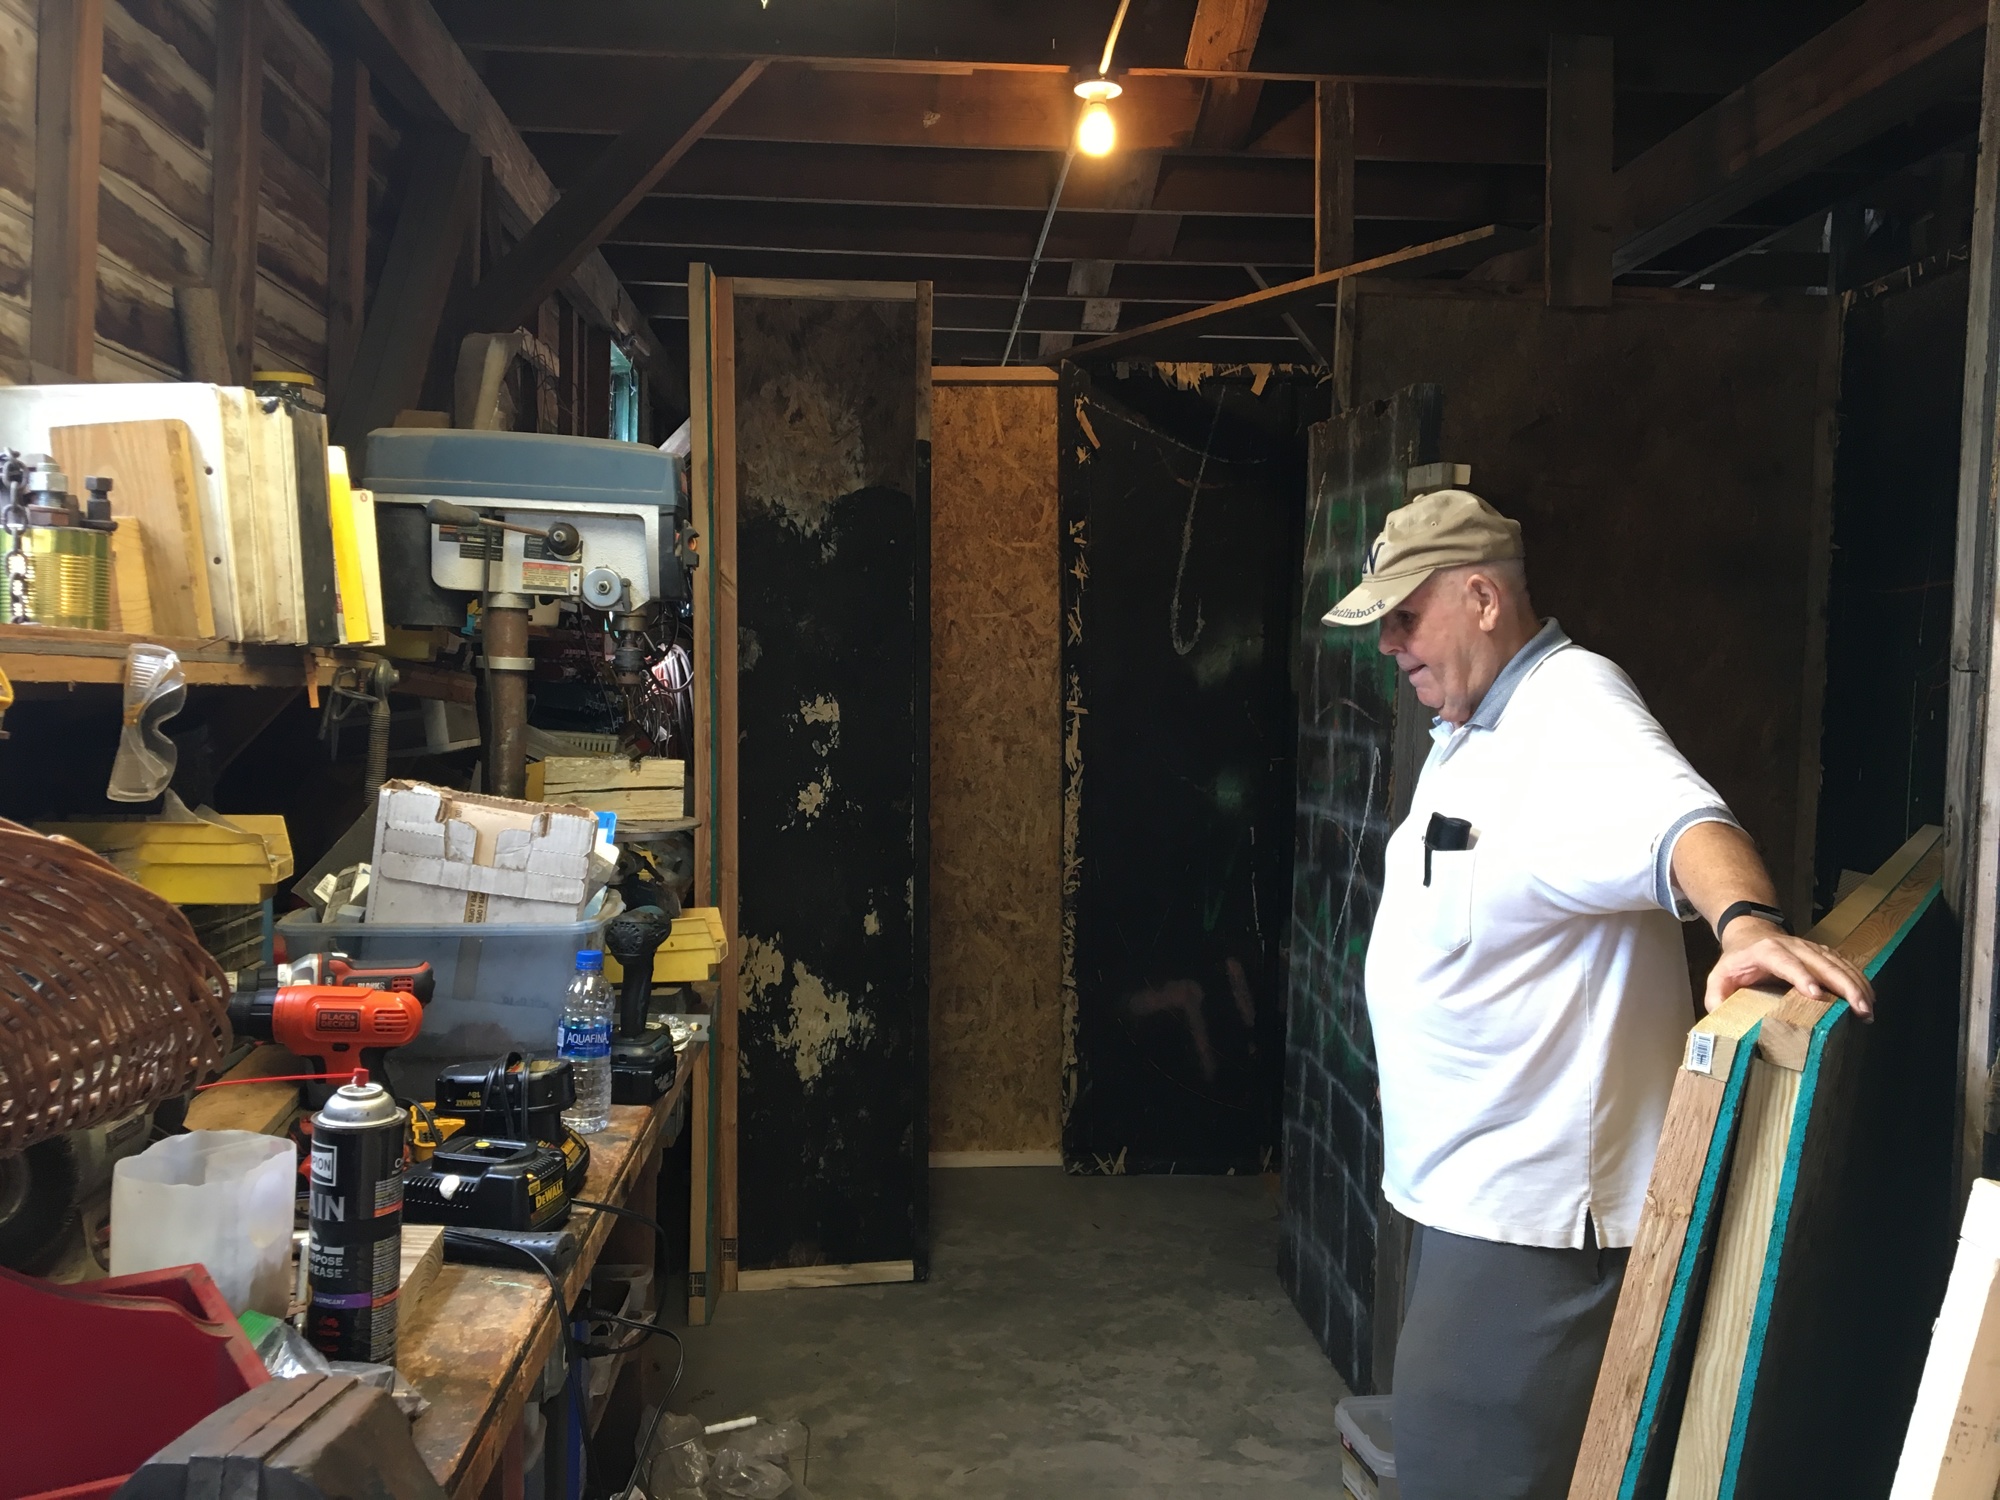 John Umpenhour surveys his tools in the barn. Photo by Joey Pellegrino